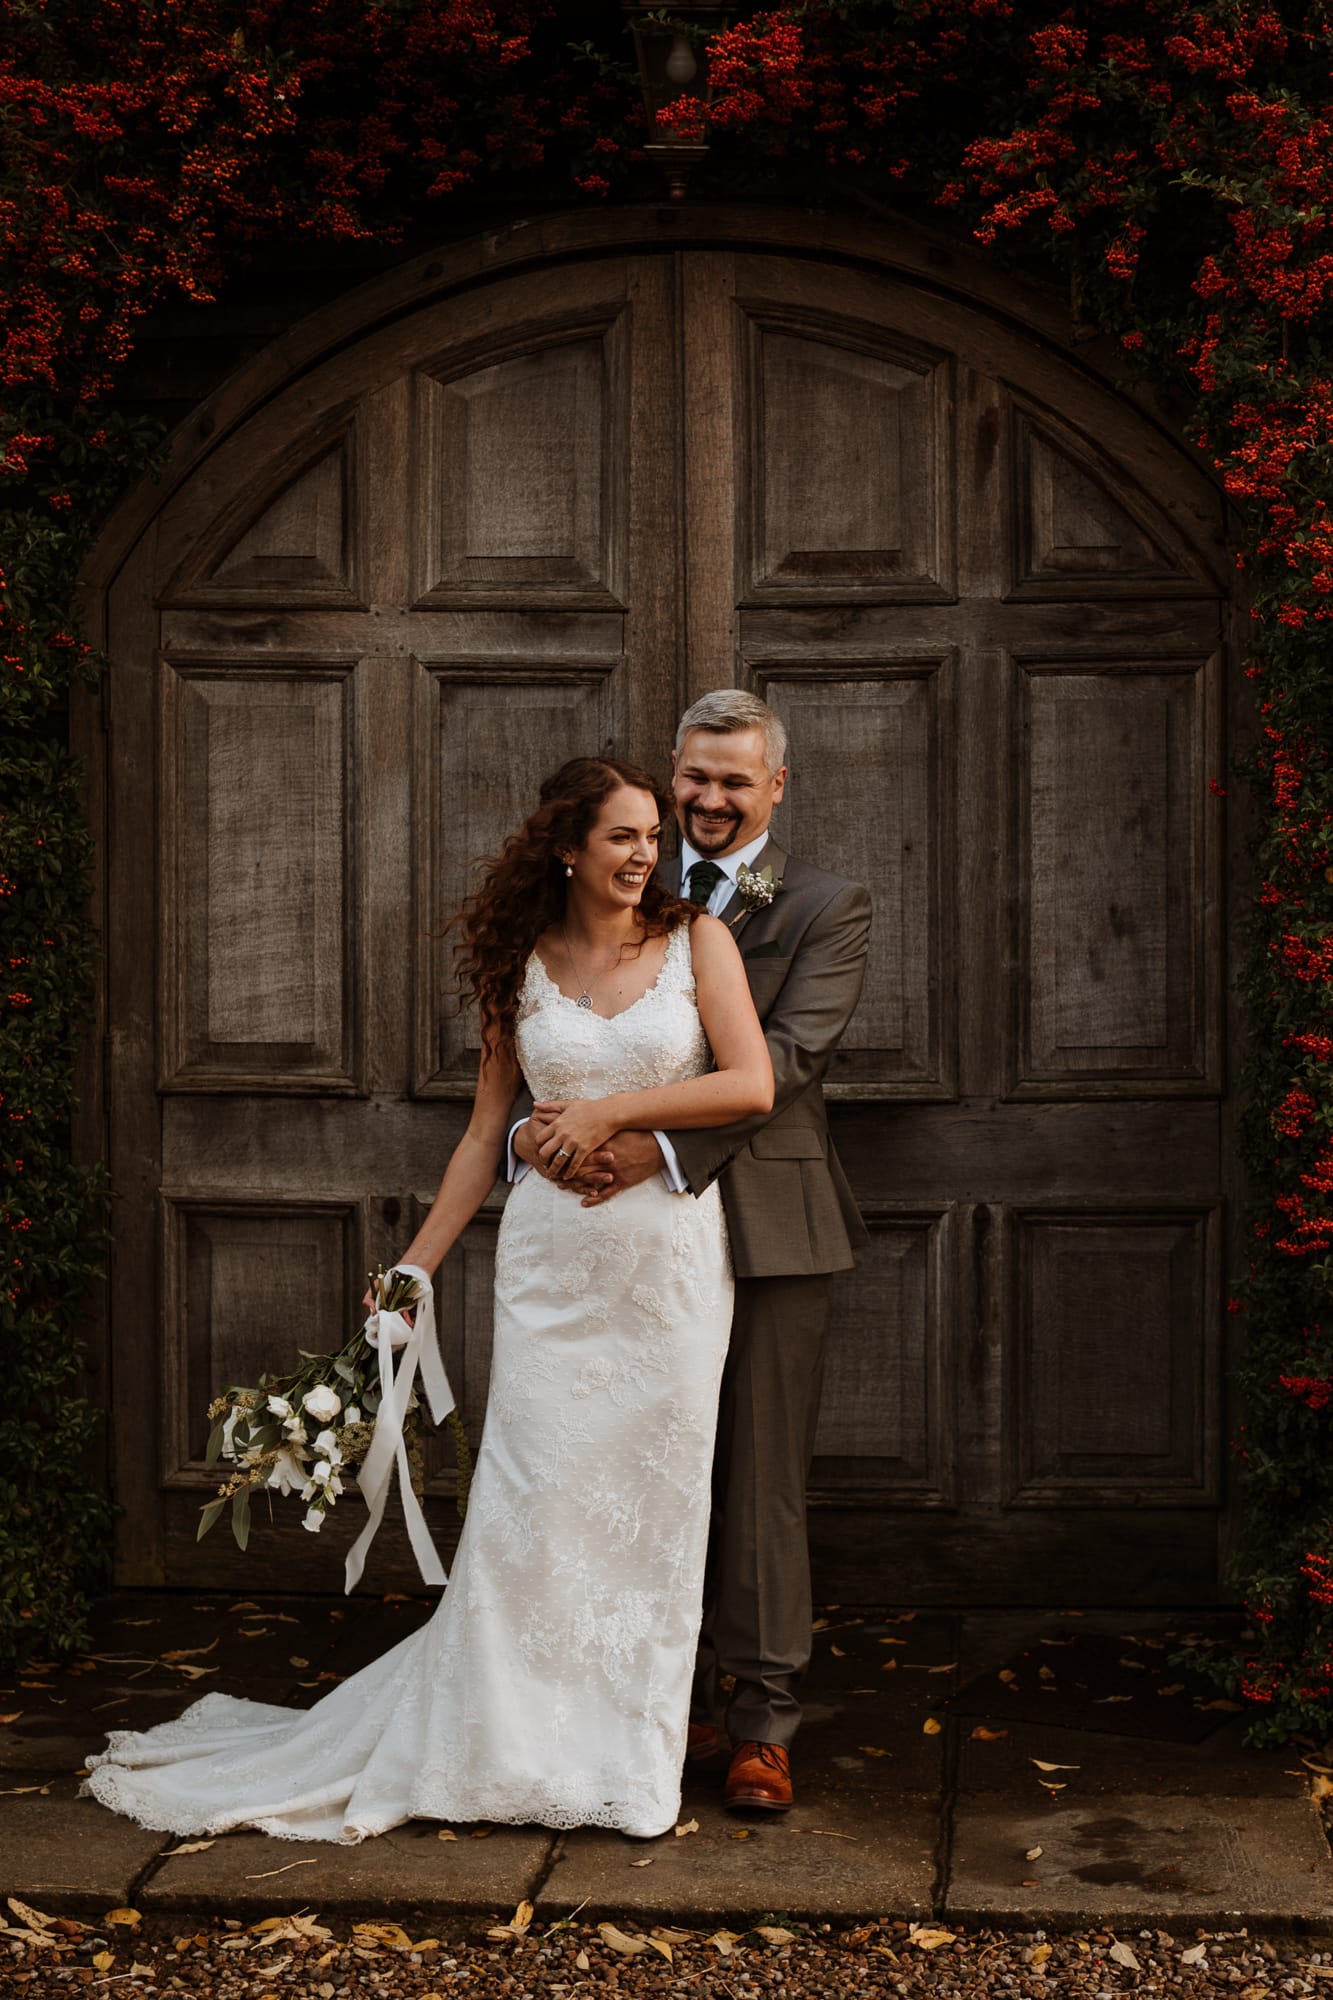 Bride and groom infront of the wooden doors at Winters Barns Wedding venue in Kent